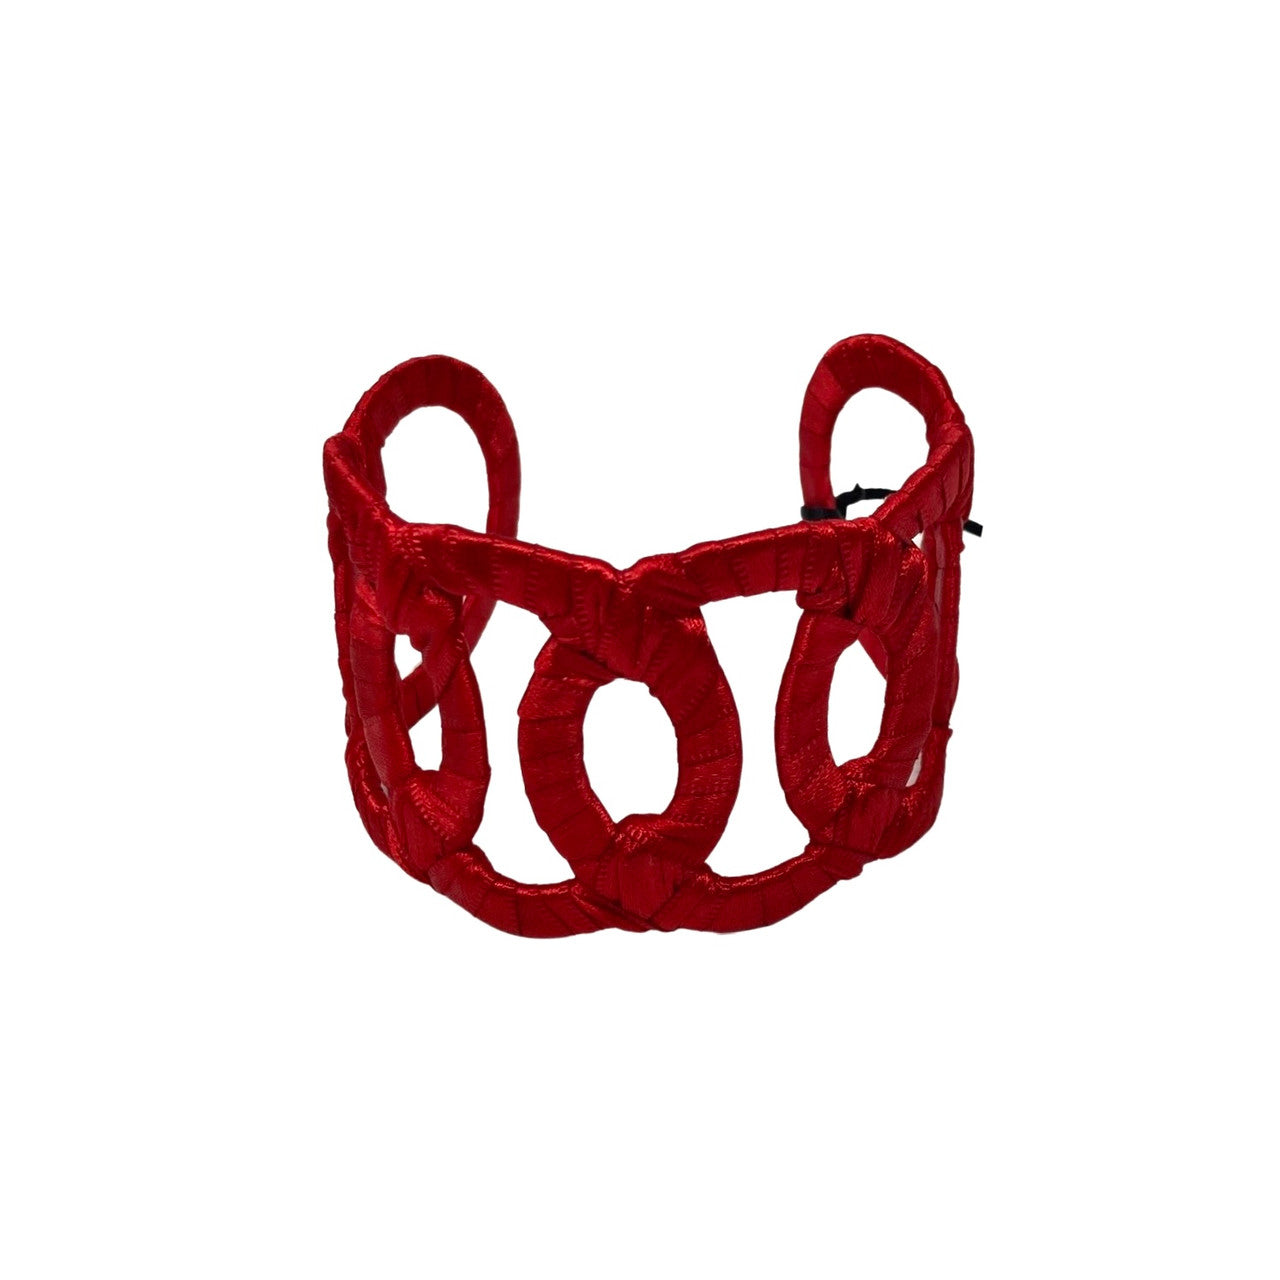 Boks & Baum Osiris Cuff Bracelet-Red Front